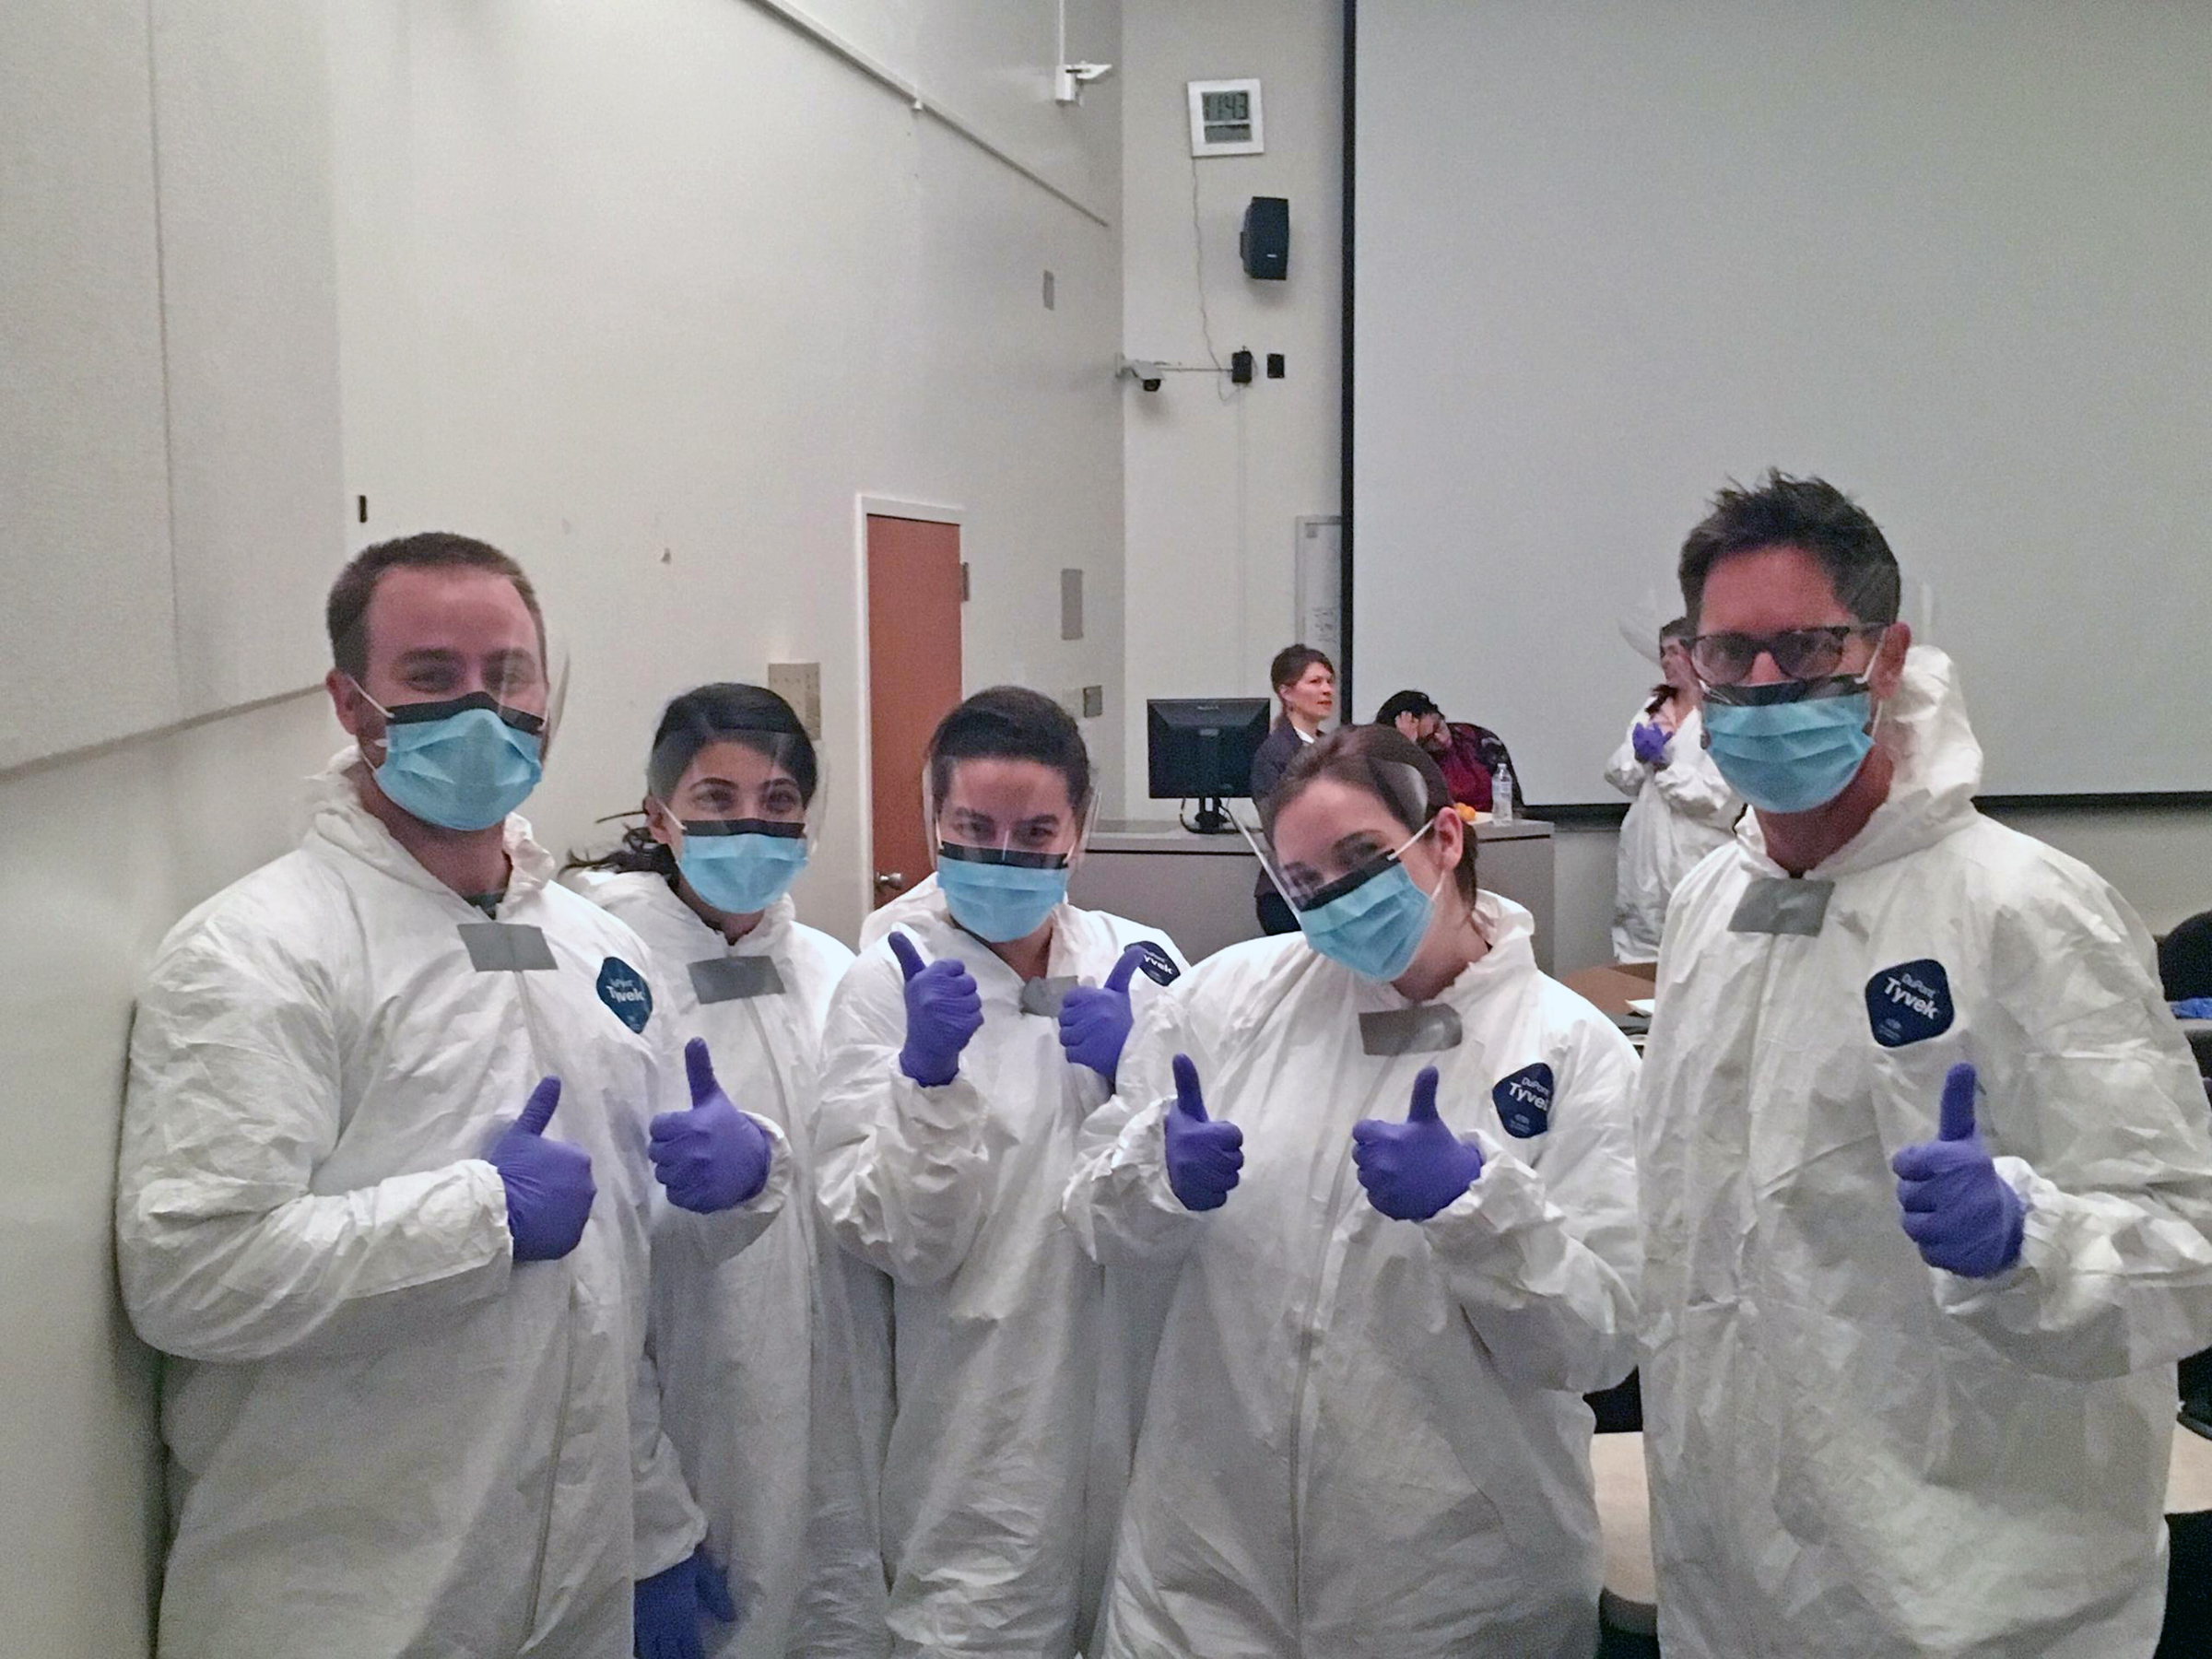 Students participate in disease outbreak simulation